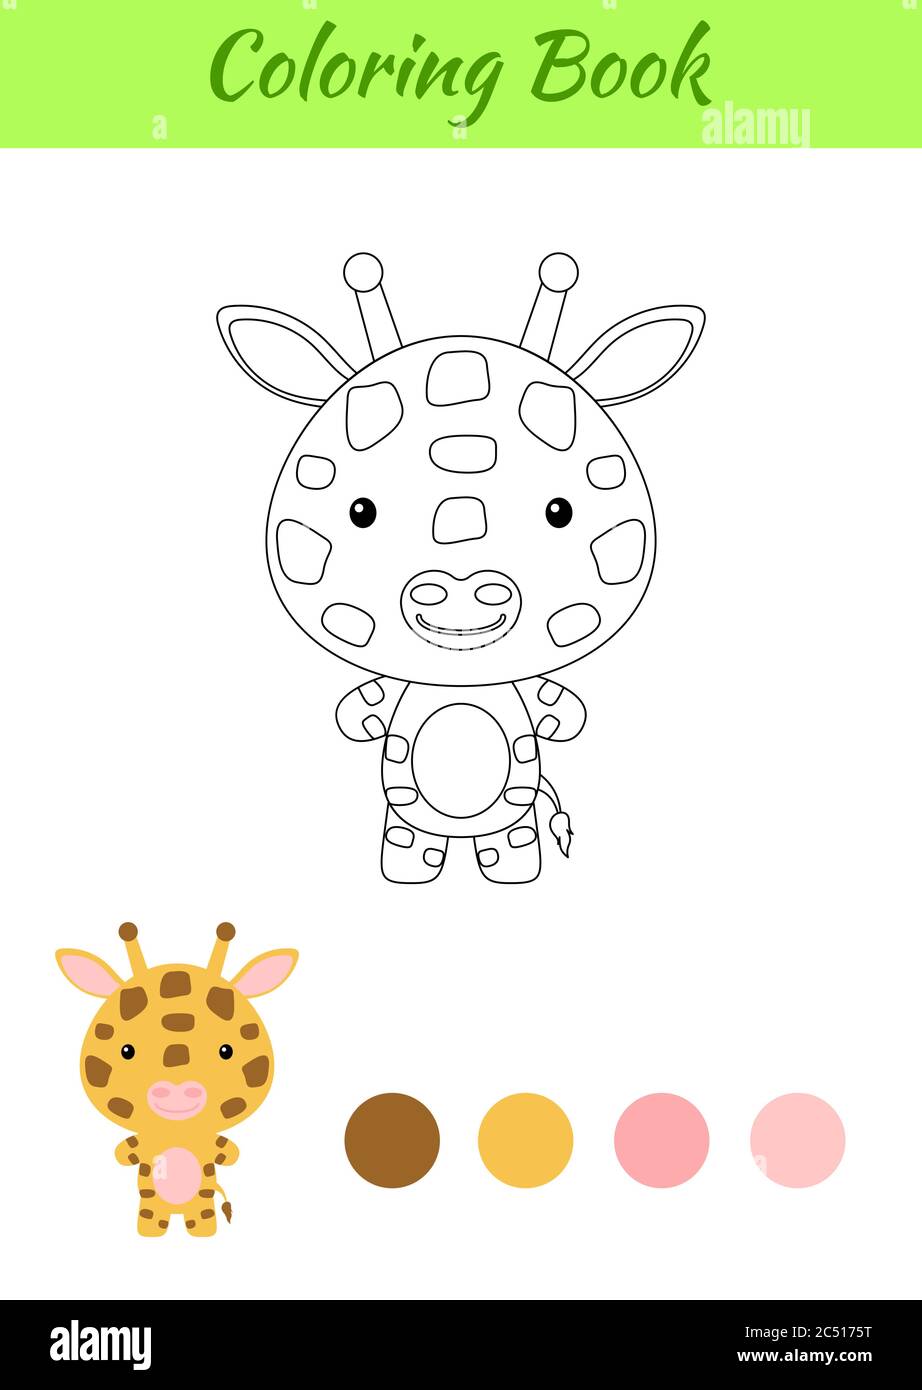 Giraffe coloring book for kids: Giraffe coloring book for 3-4-5-6